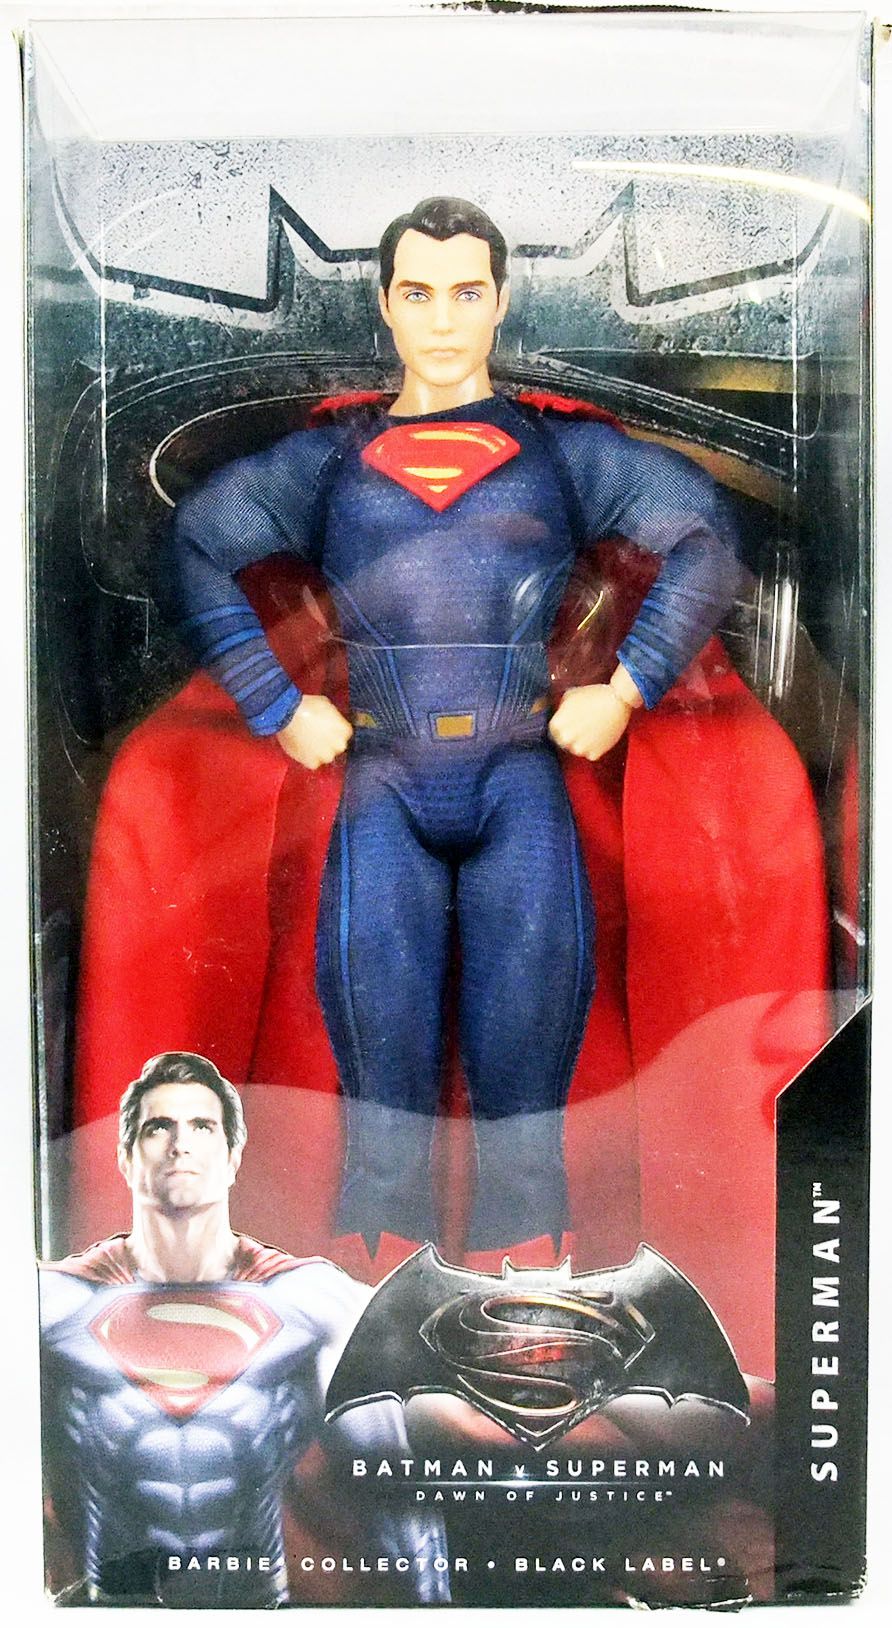 BARBIE COLLECTOR BATMAN V SUPERMAN DAWN OF JUSTICE 12" SUPERMAN DGY06 